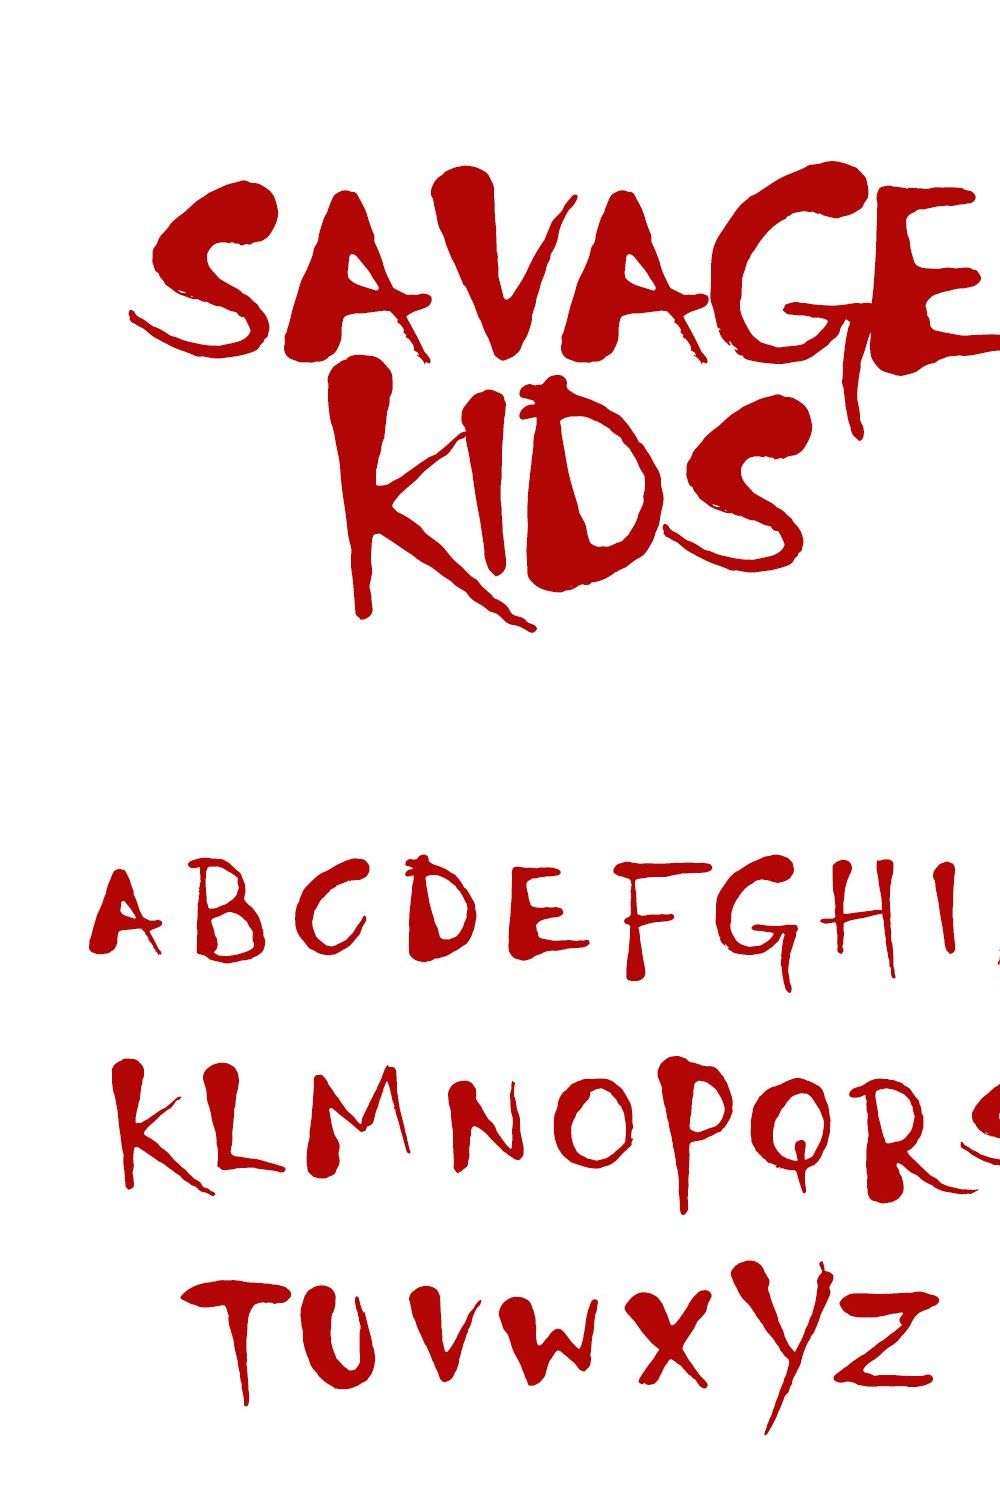 Savage Kids - E1 pinterest preview image.